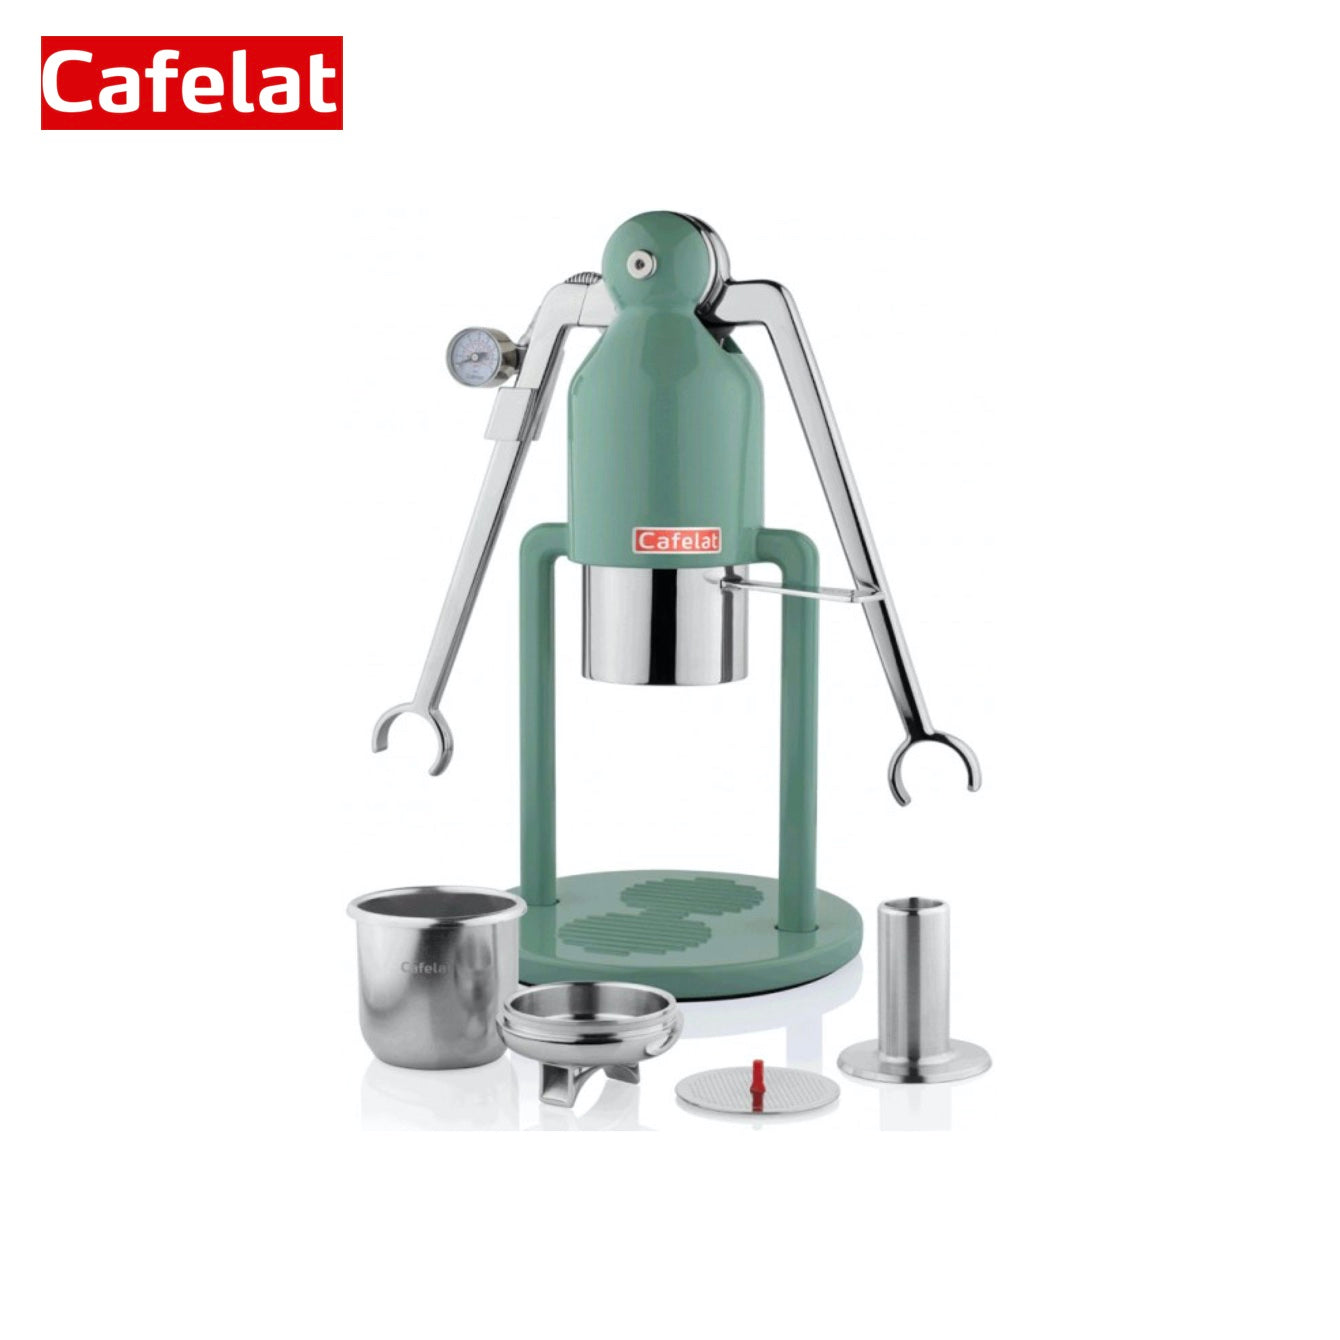 retro green Cafelat Robot Espresso Maker (with pressure gauge)